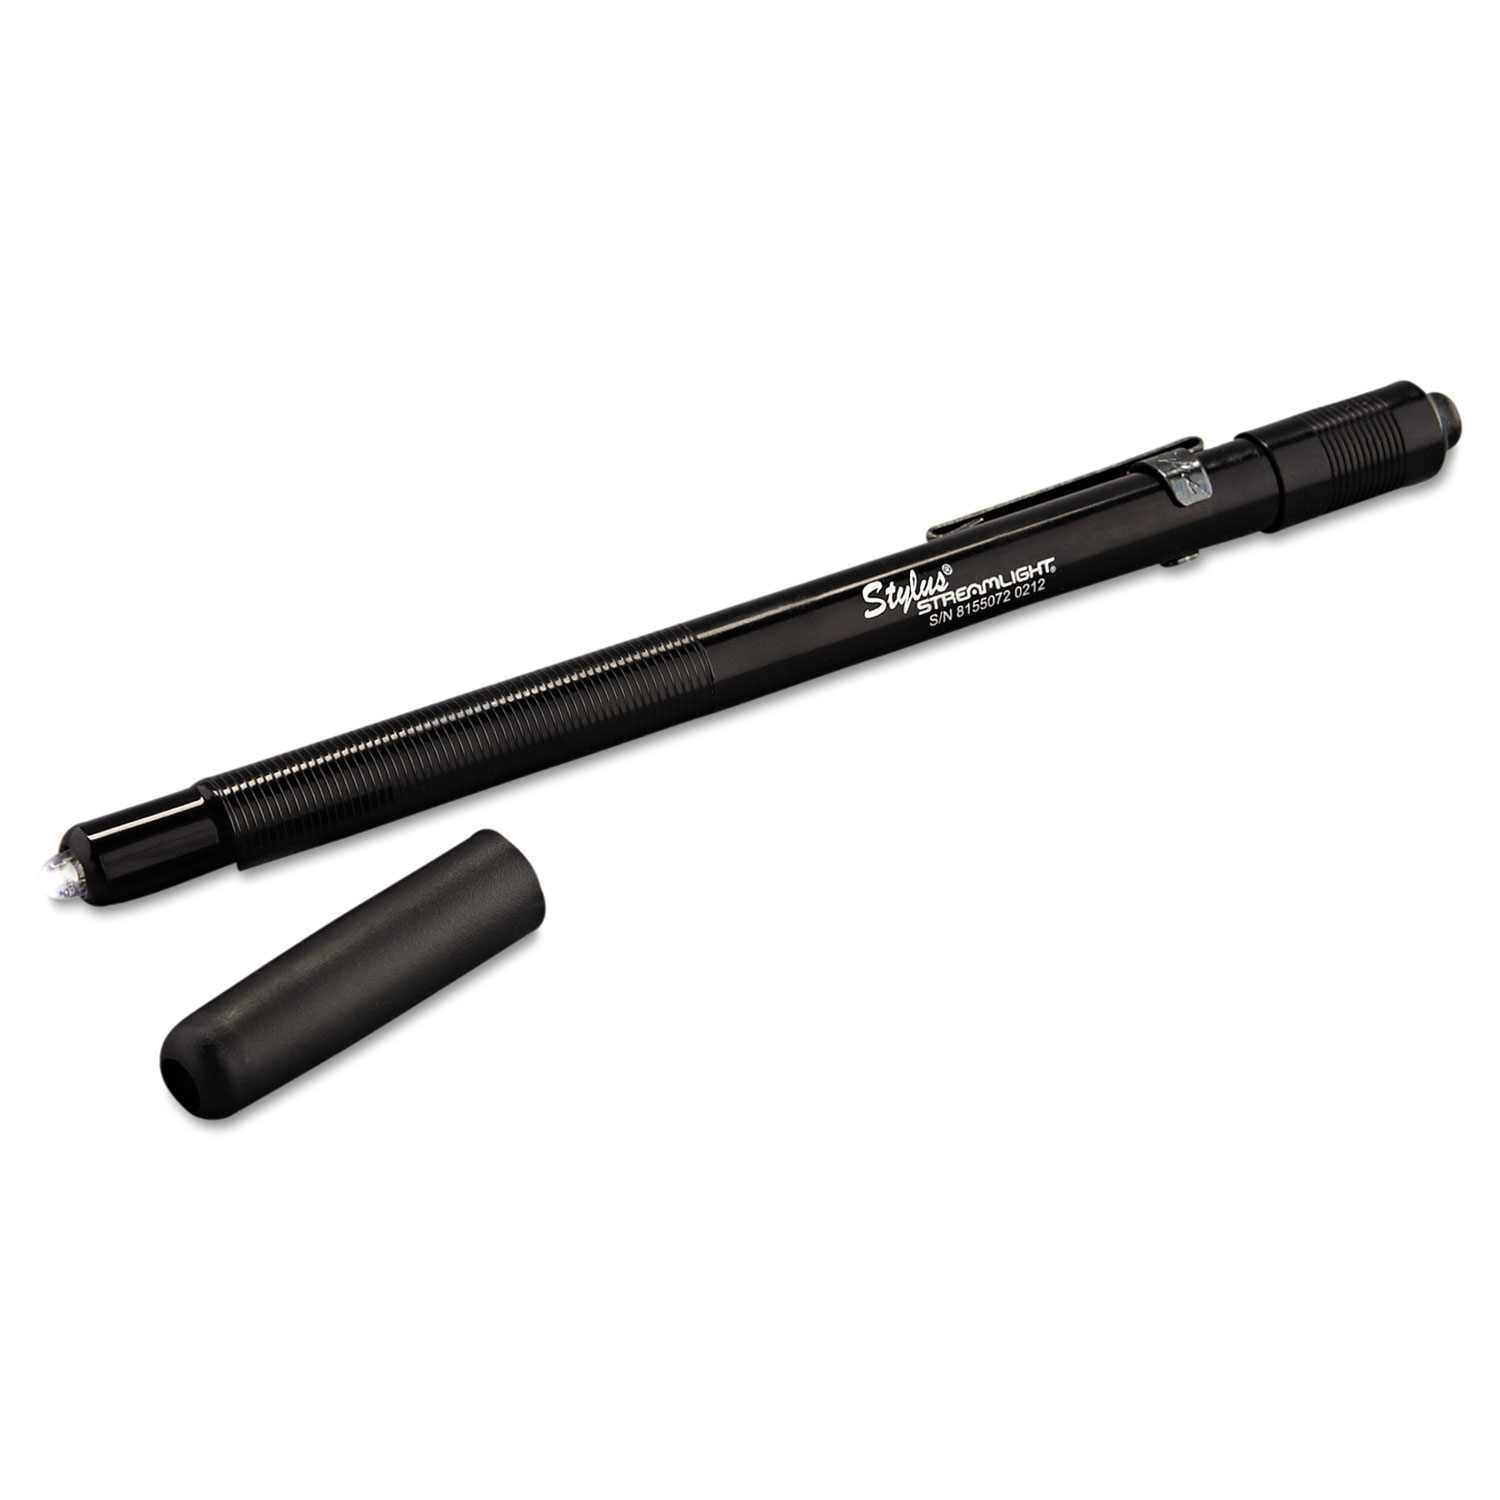  Streamlight 65018 Stylus LED Pen Light, 3 AAAA Batteries (Included), Black (LGT65018) 